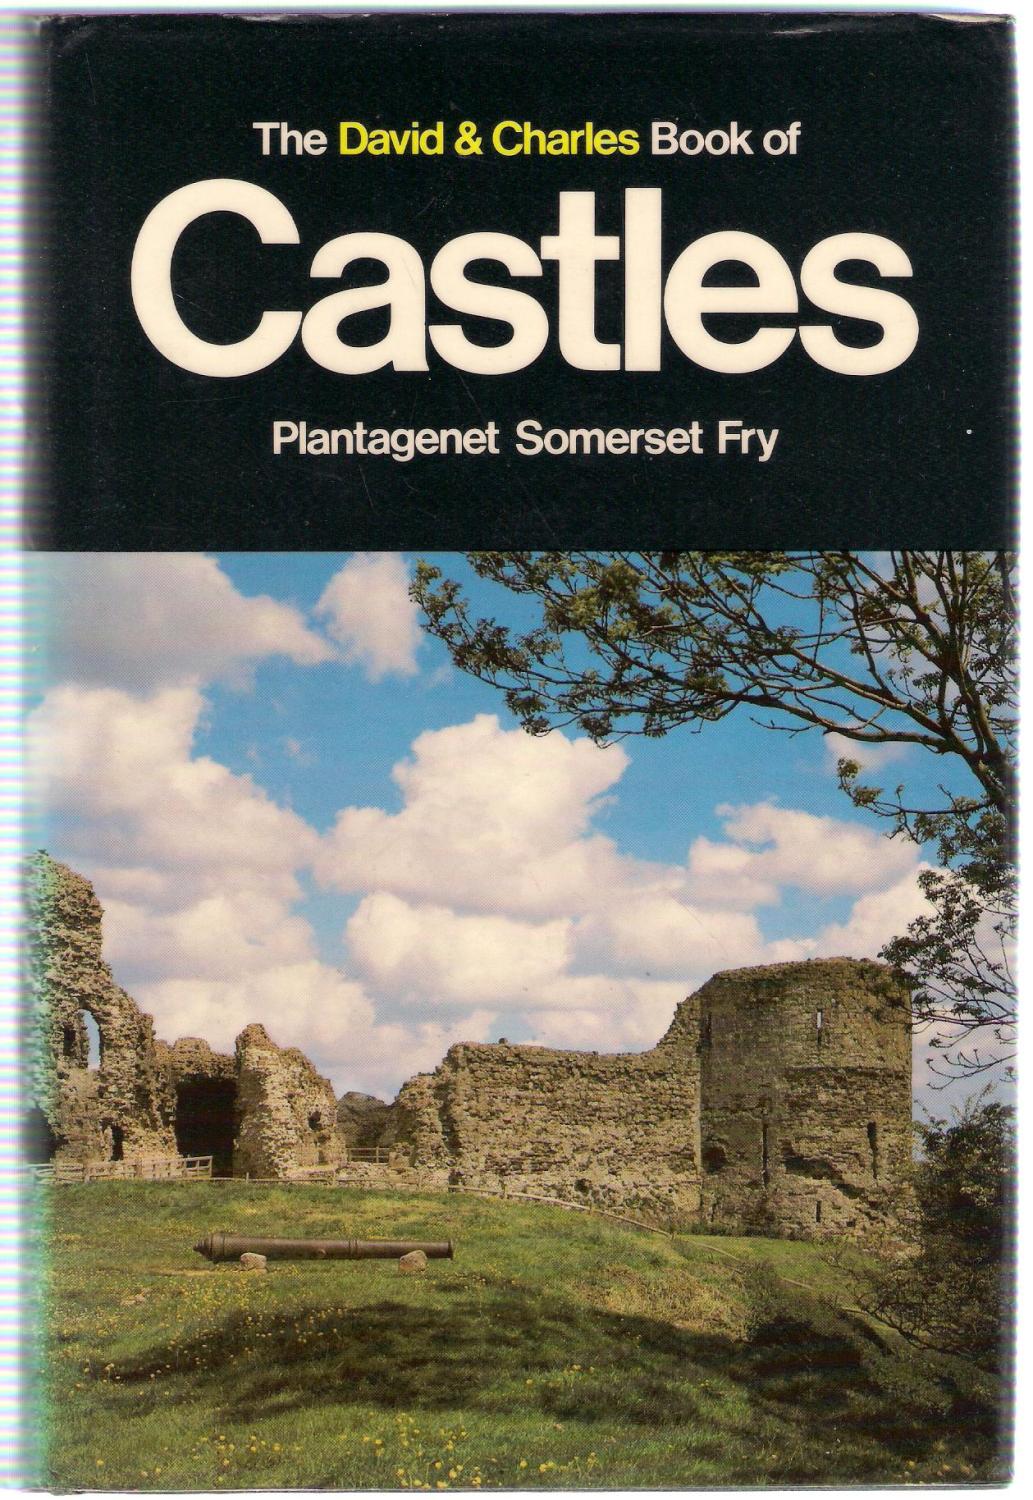 The David & Charles Book of Castles - Somerset Fry, Plantagenet